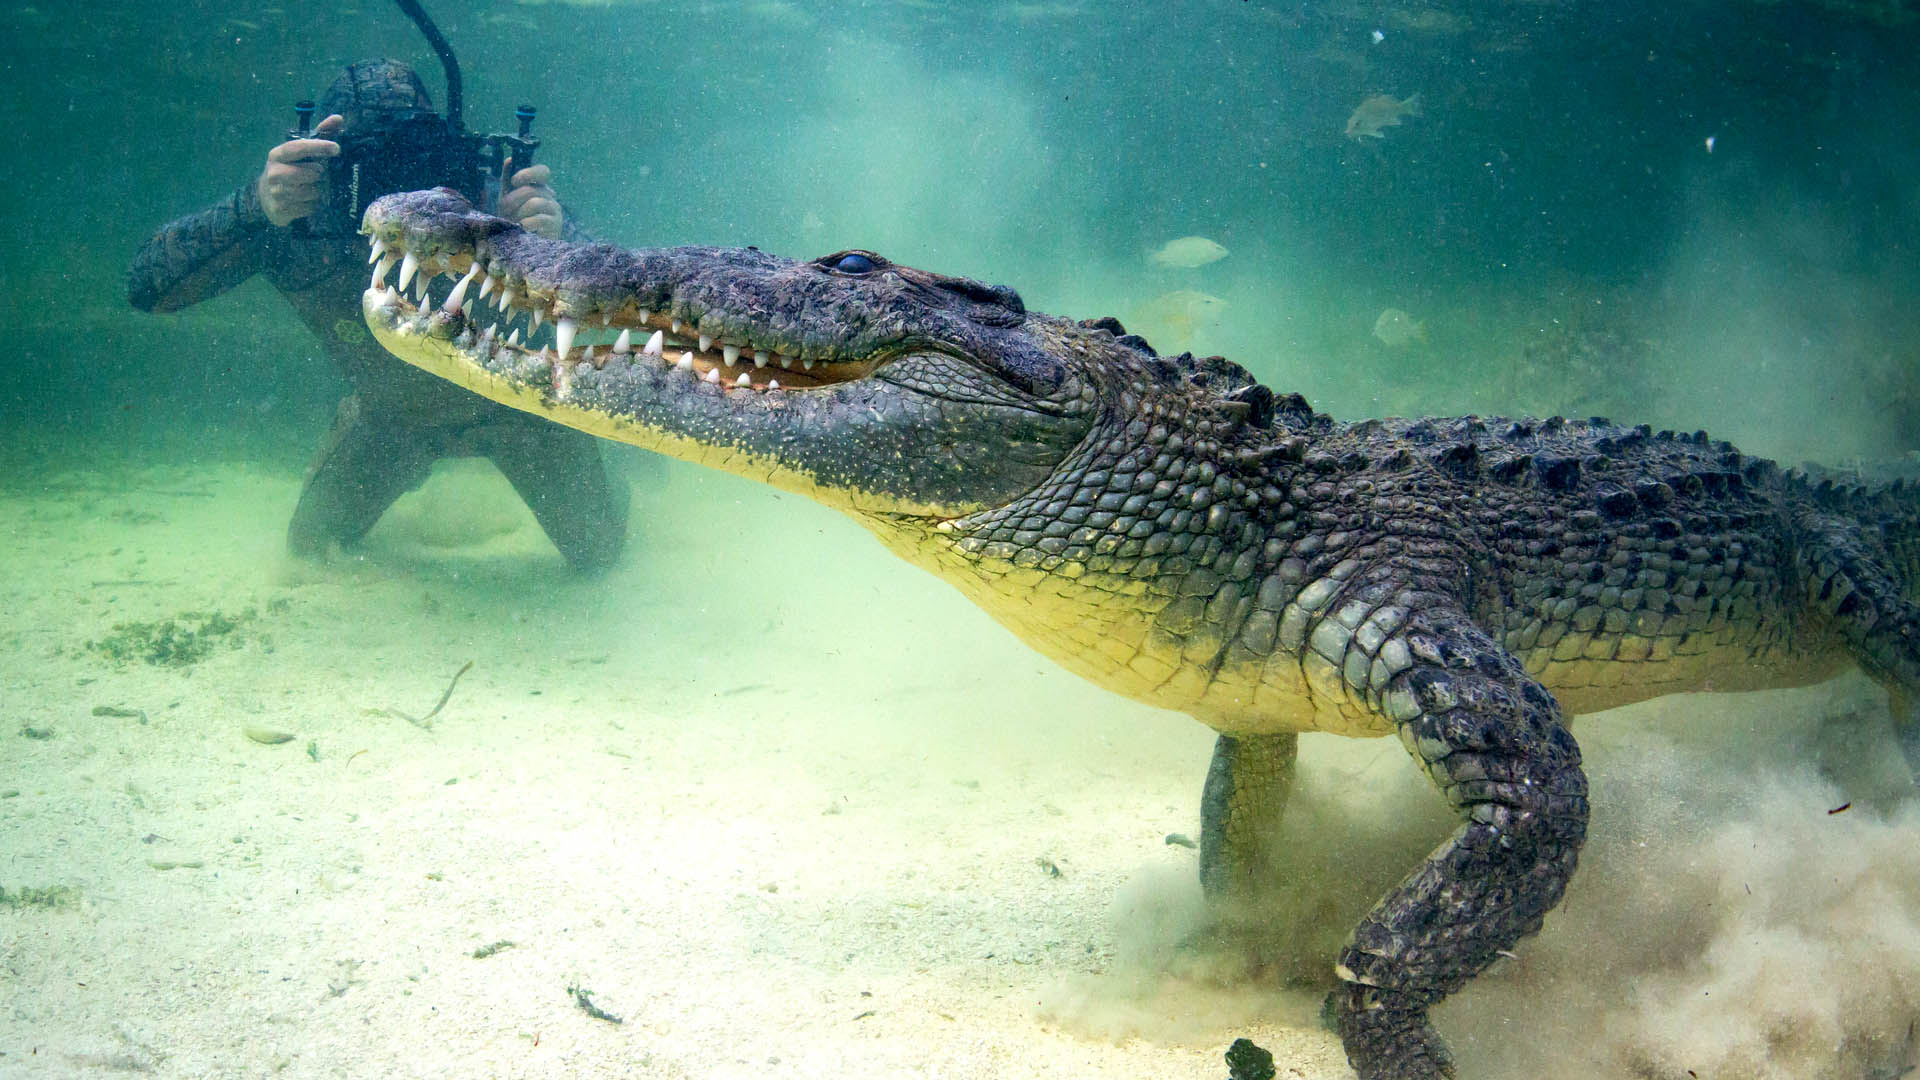 Forrest Galante films a crocodile in June 2016.